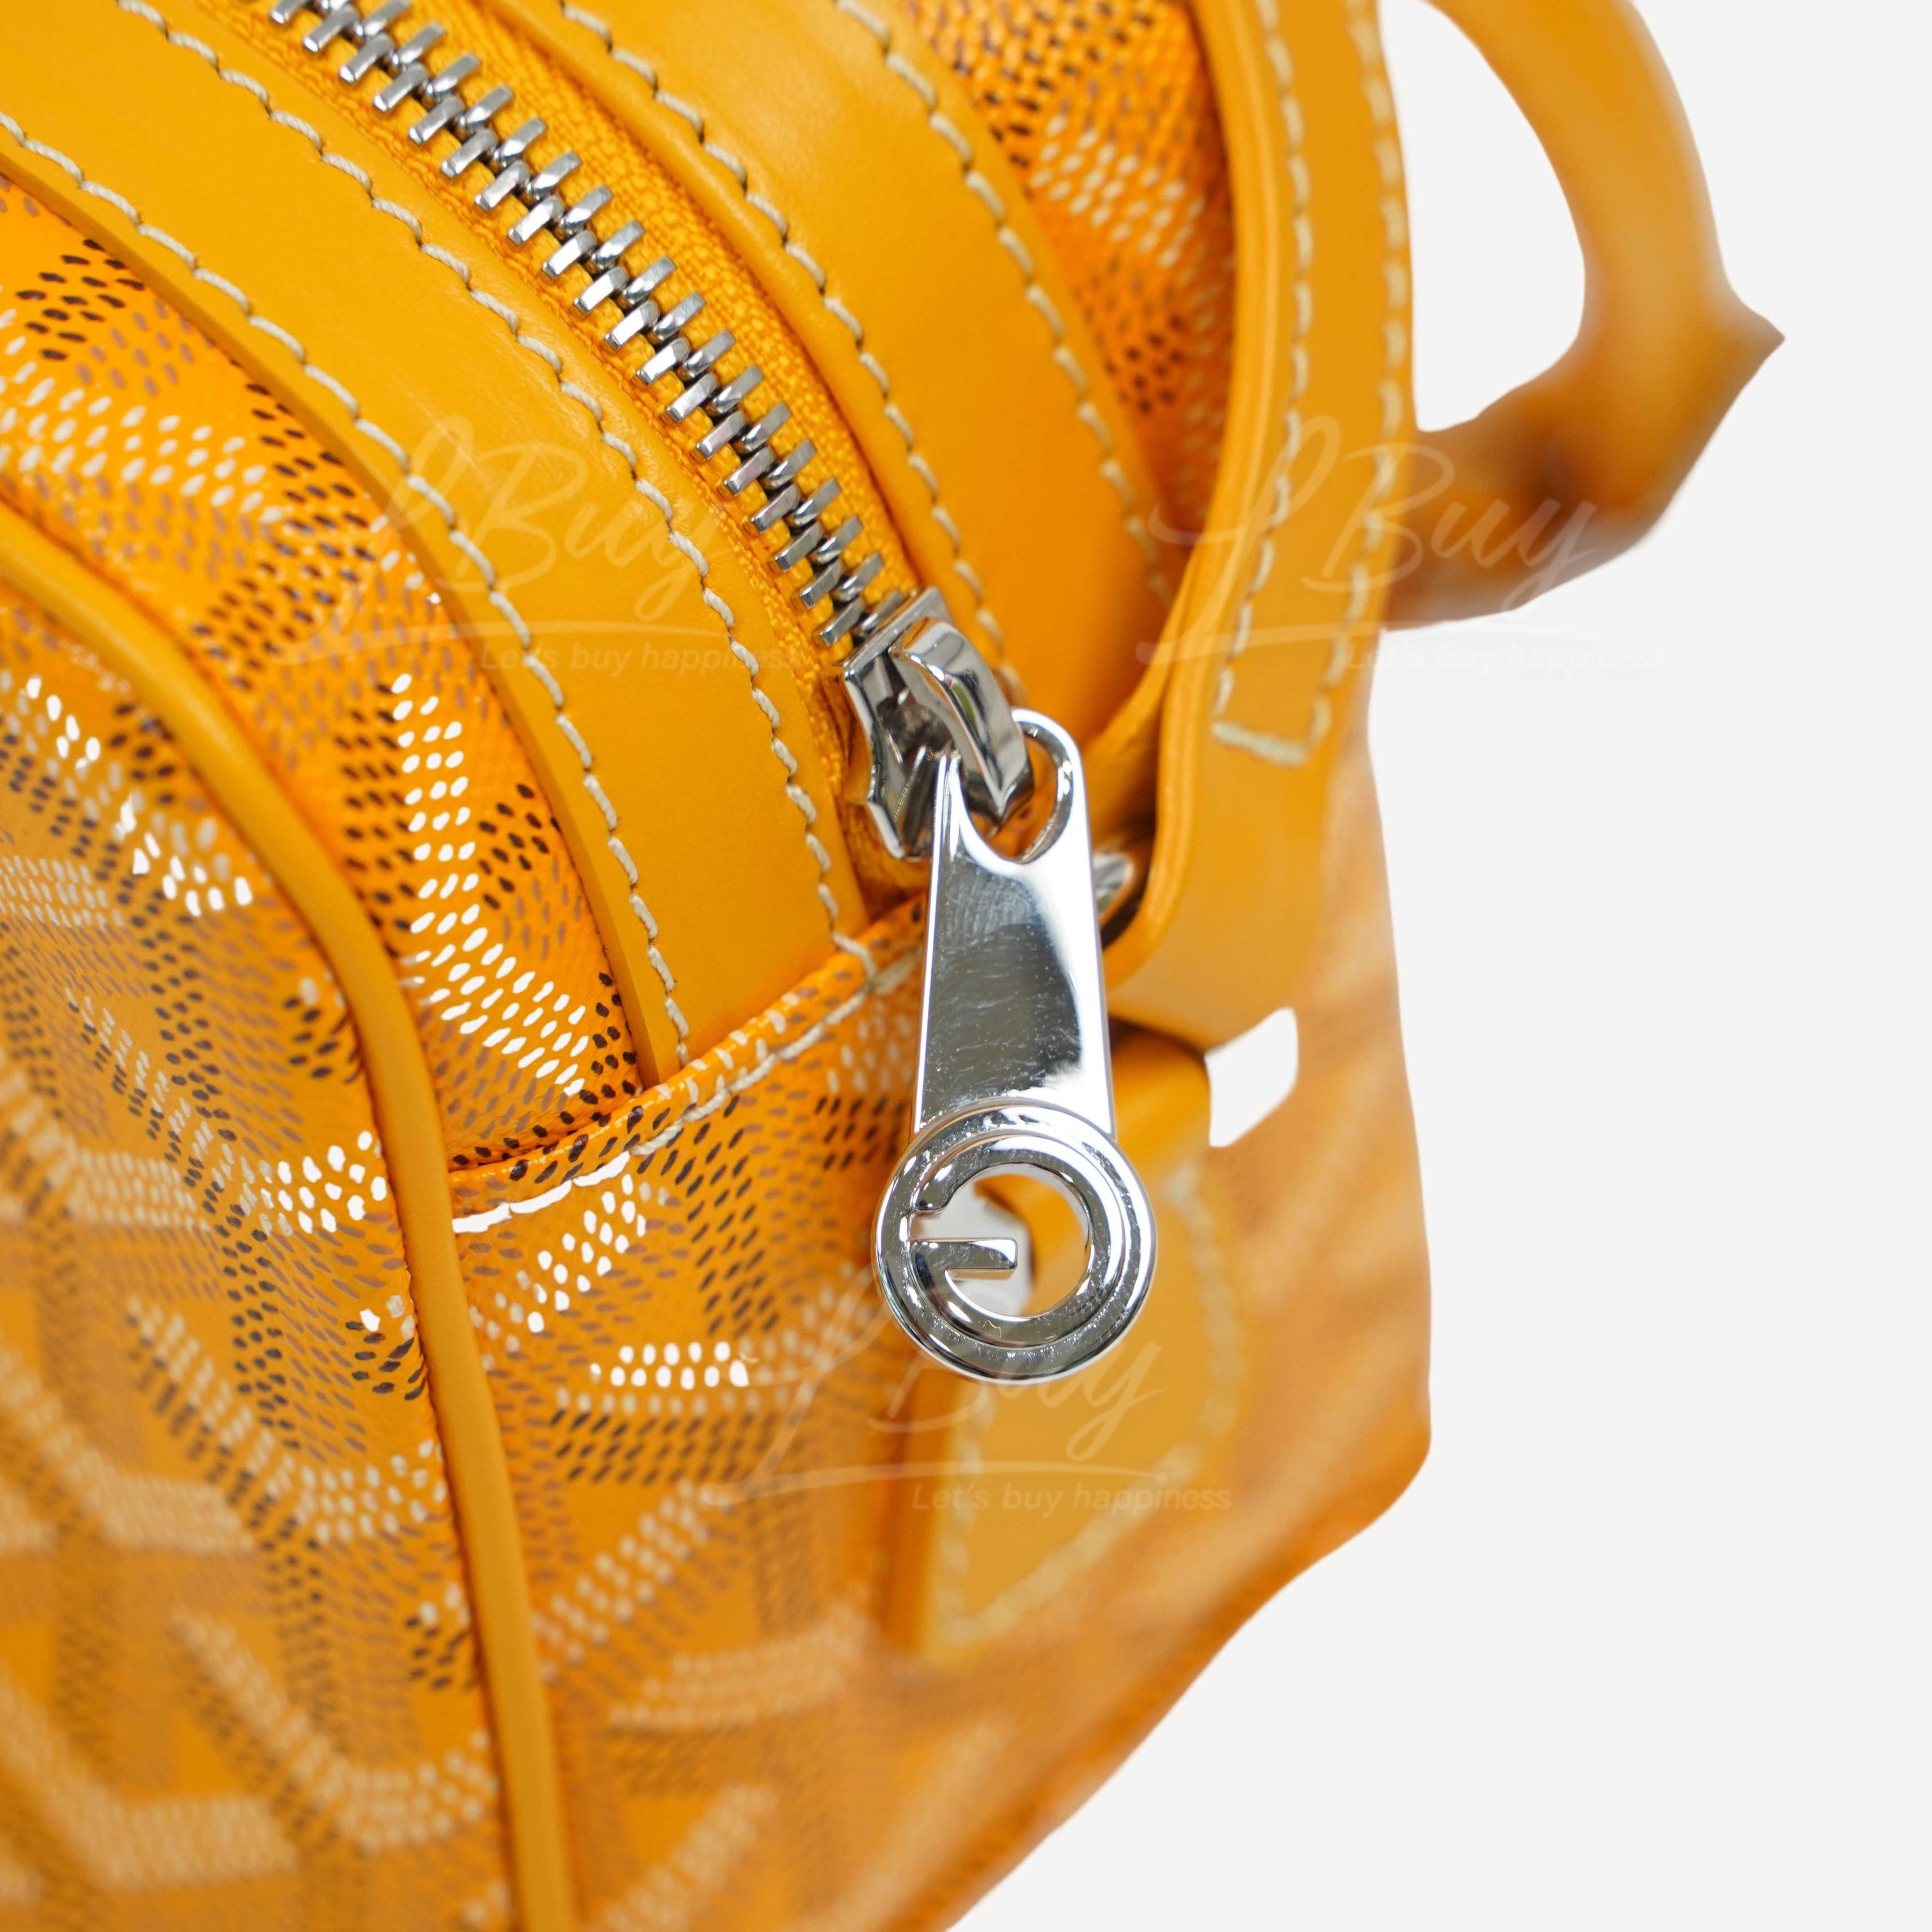 GOYARD-Goyard Cap-Vert PM Bag Yellow